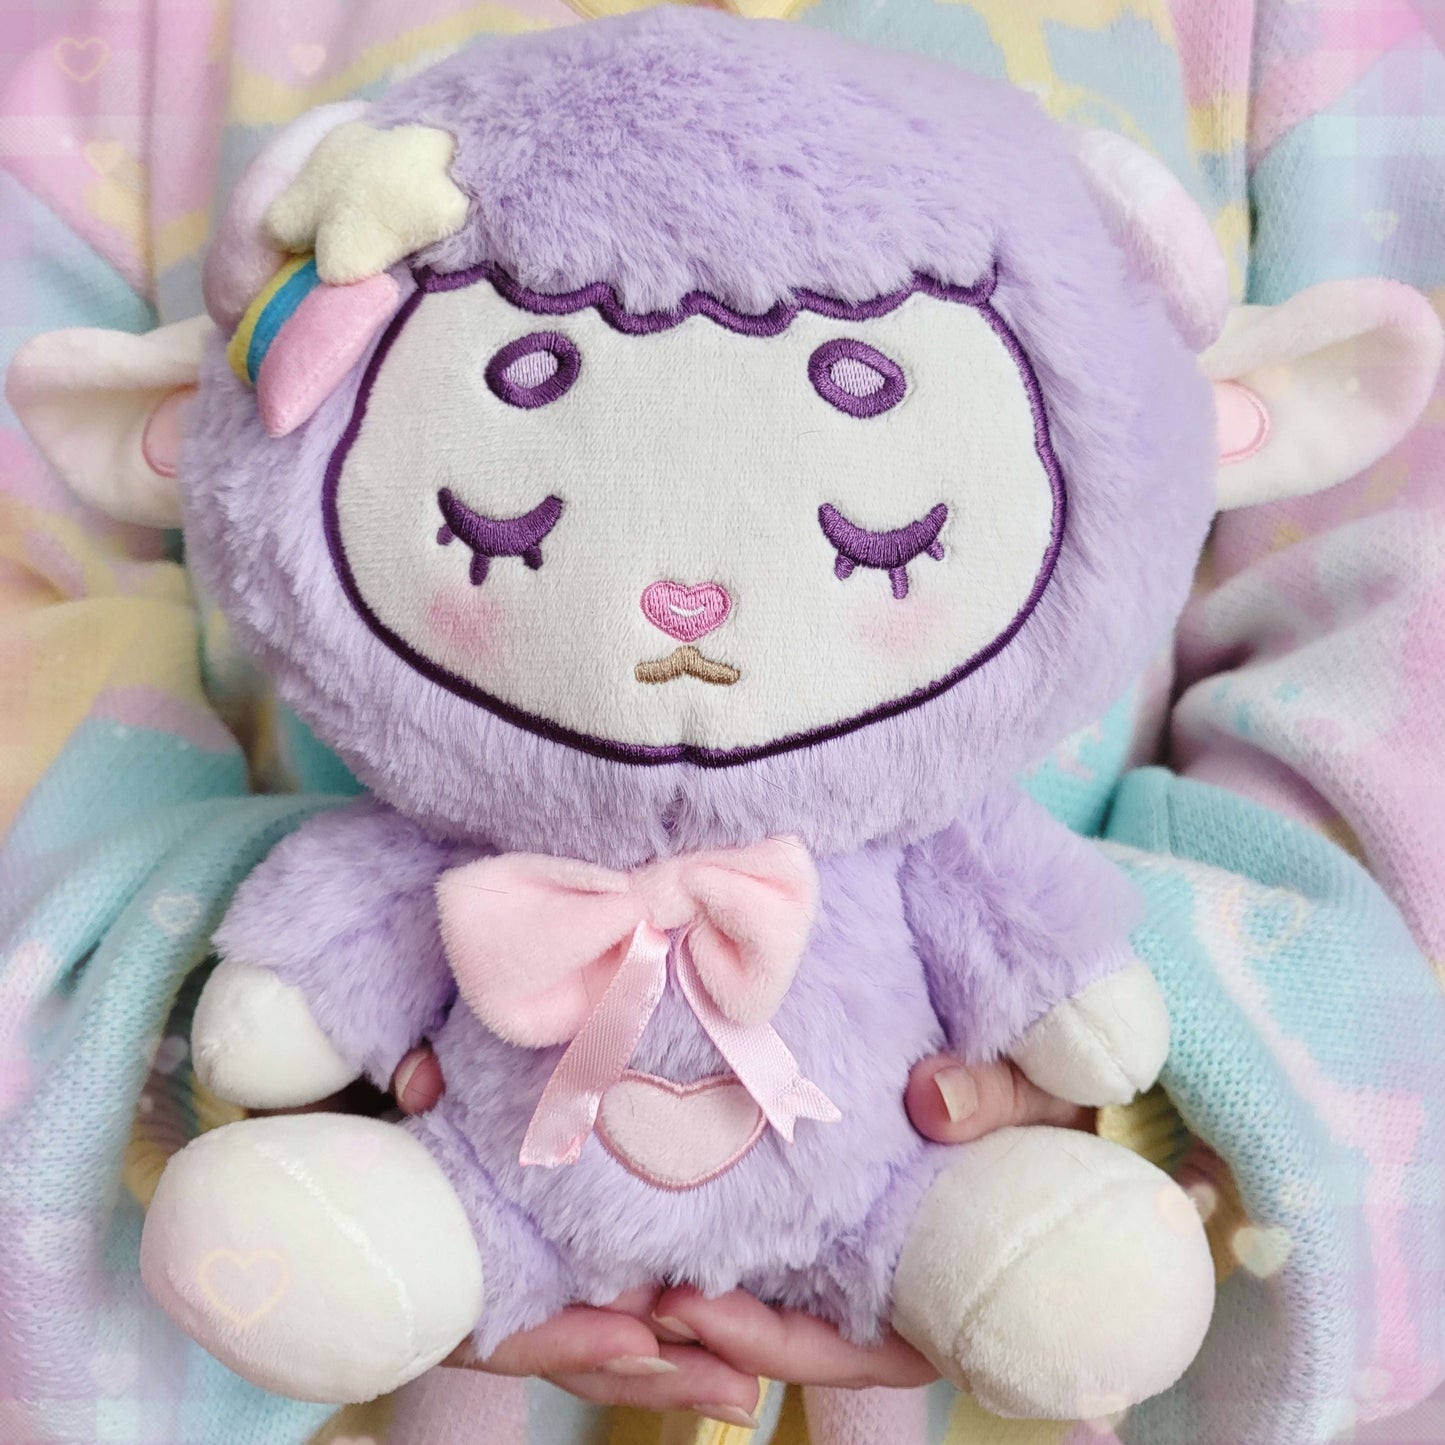 Lullaby the sleepy lamb plush